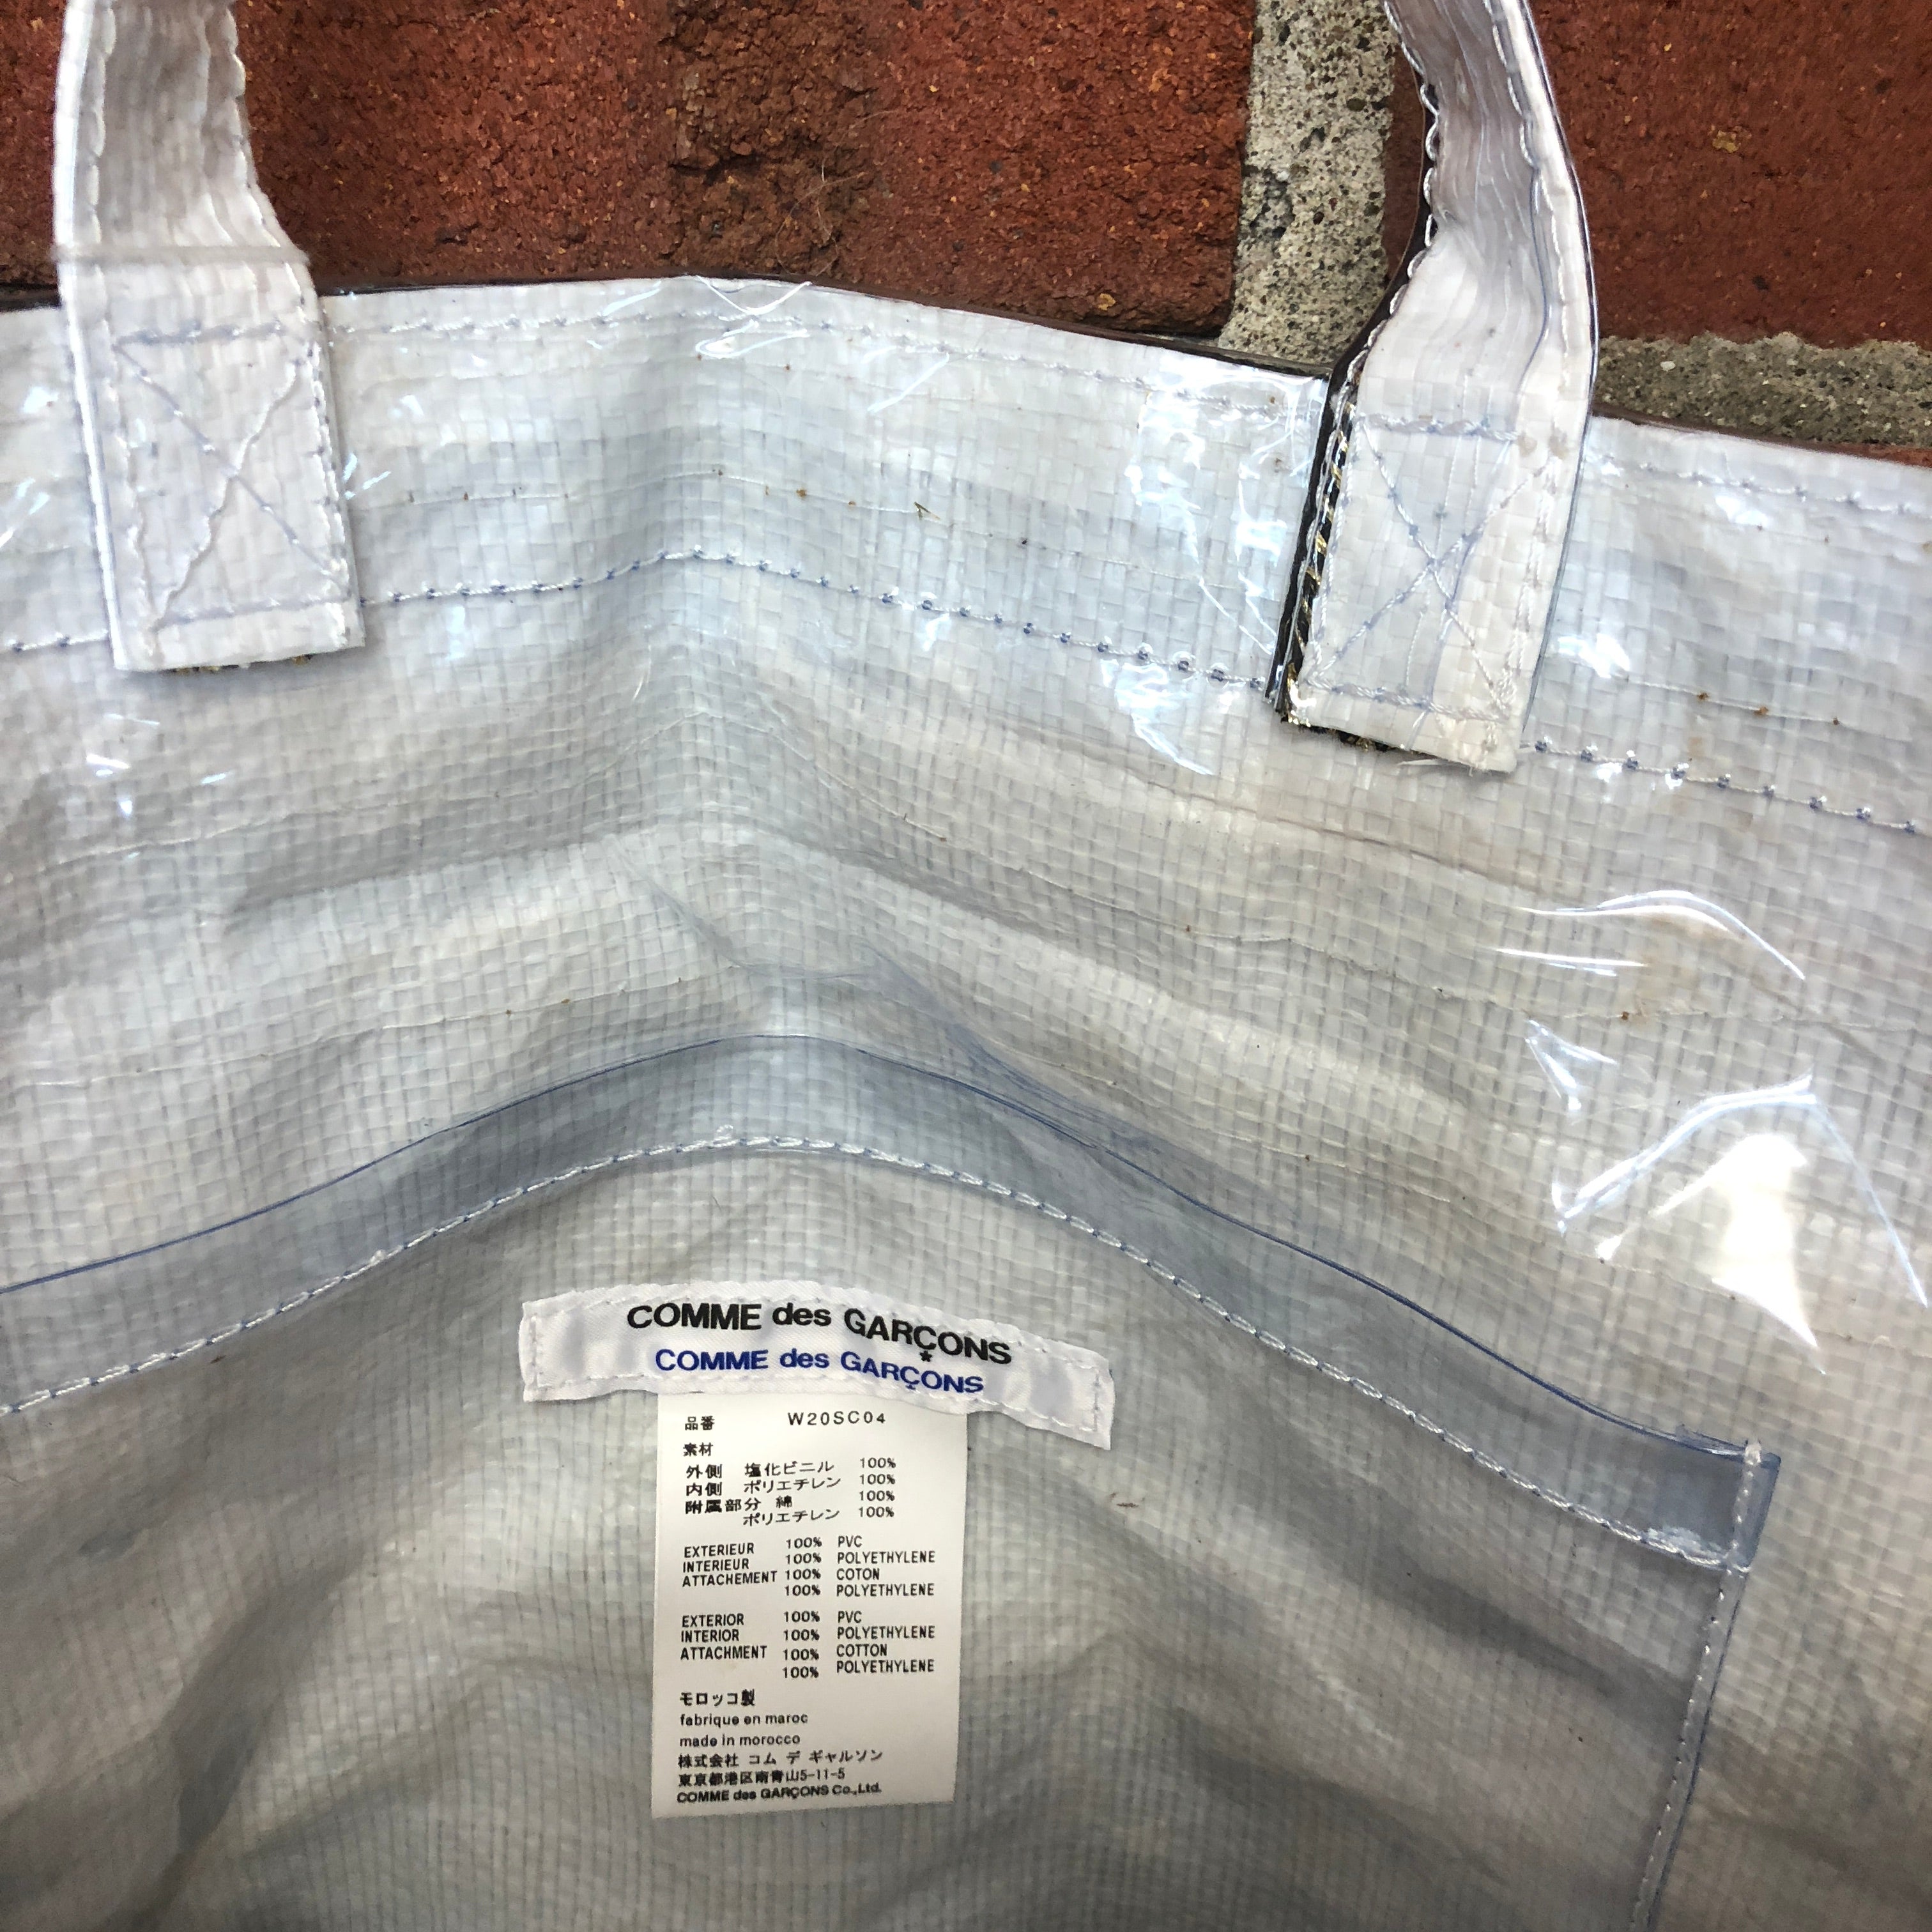 COMME DES GARCONS plastic covered bag